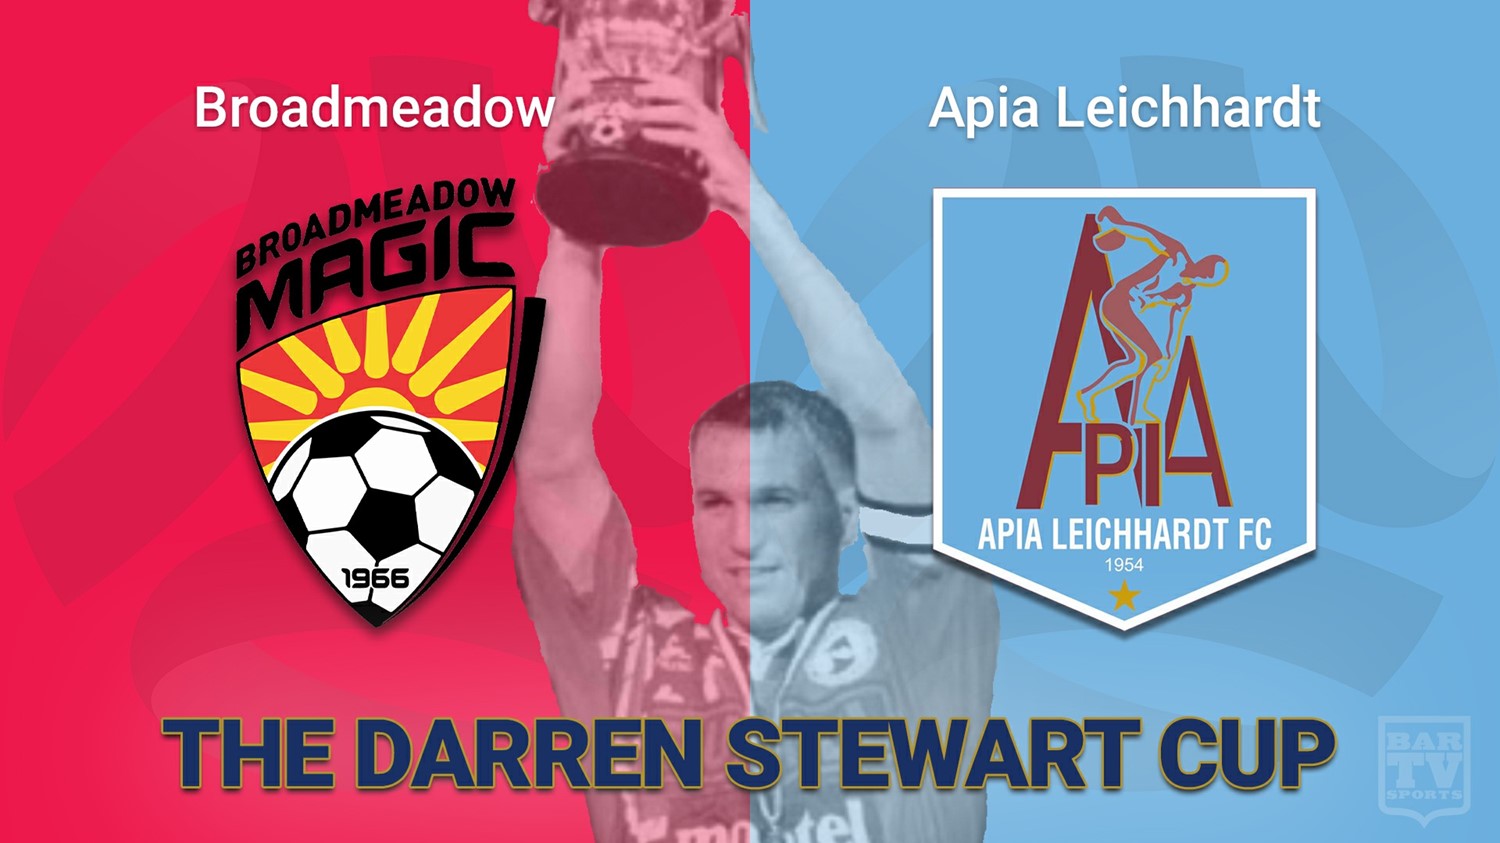 220205-NNSW NPL Darren Stewart Cup - Broadmeadow Magic v APIA Leichhardt Minigame Slate Image